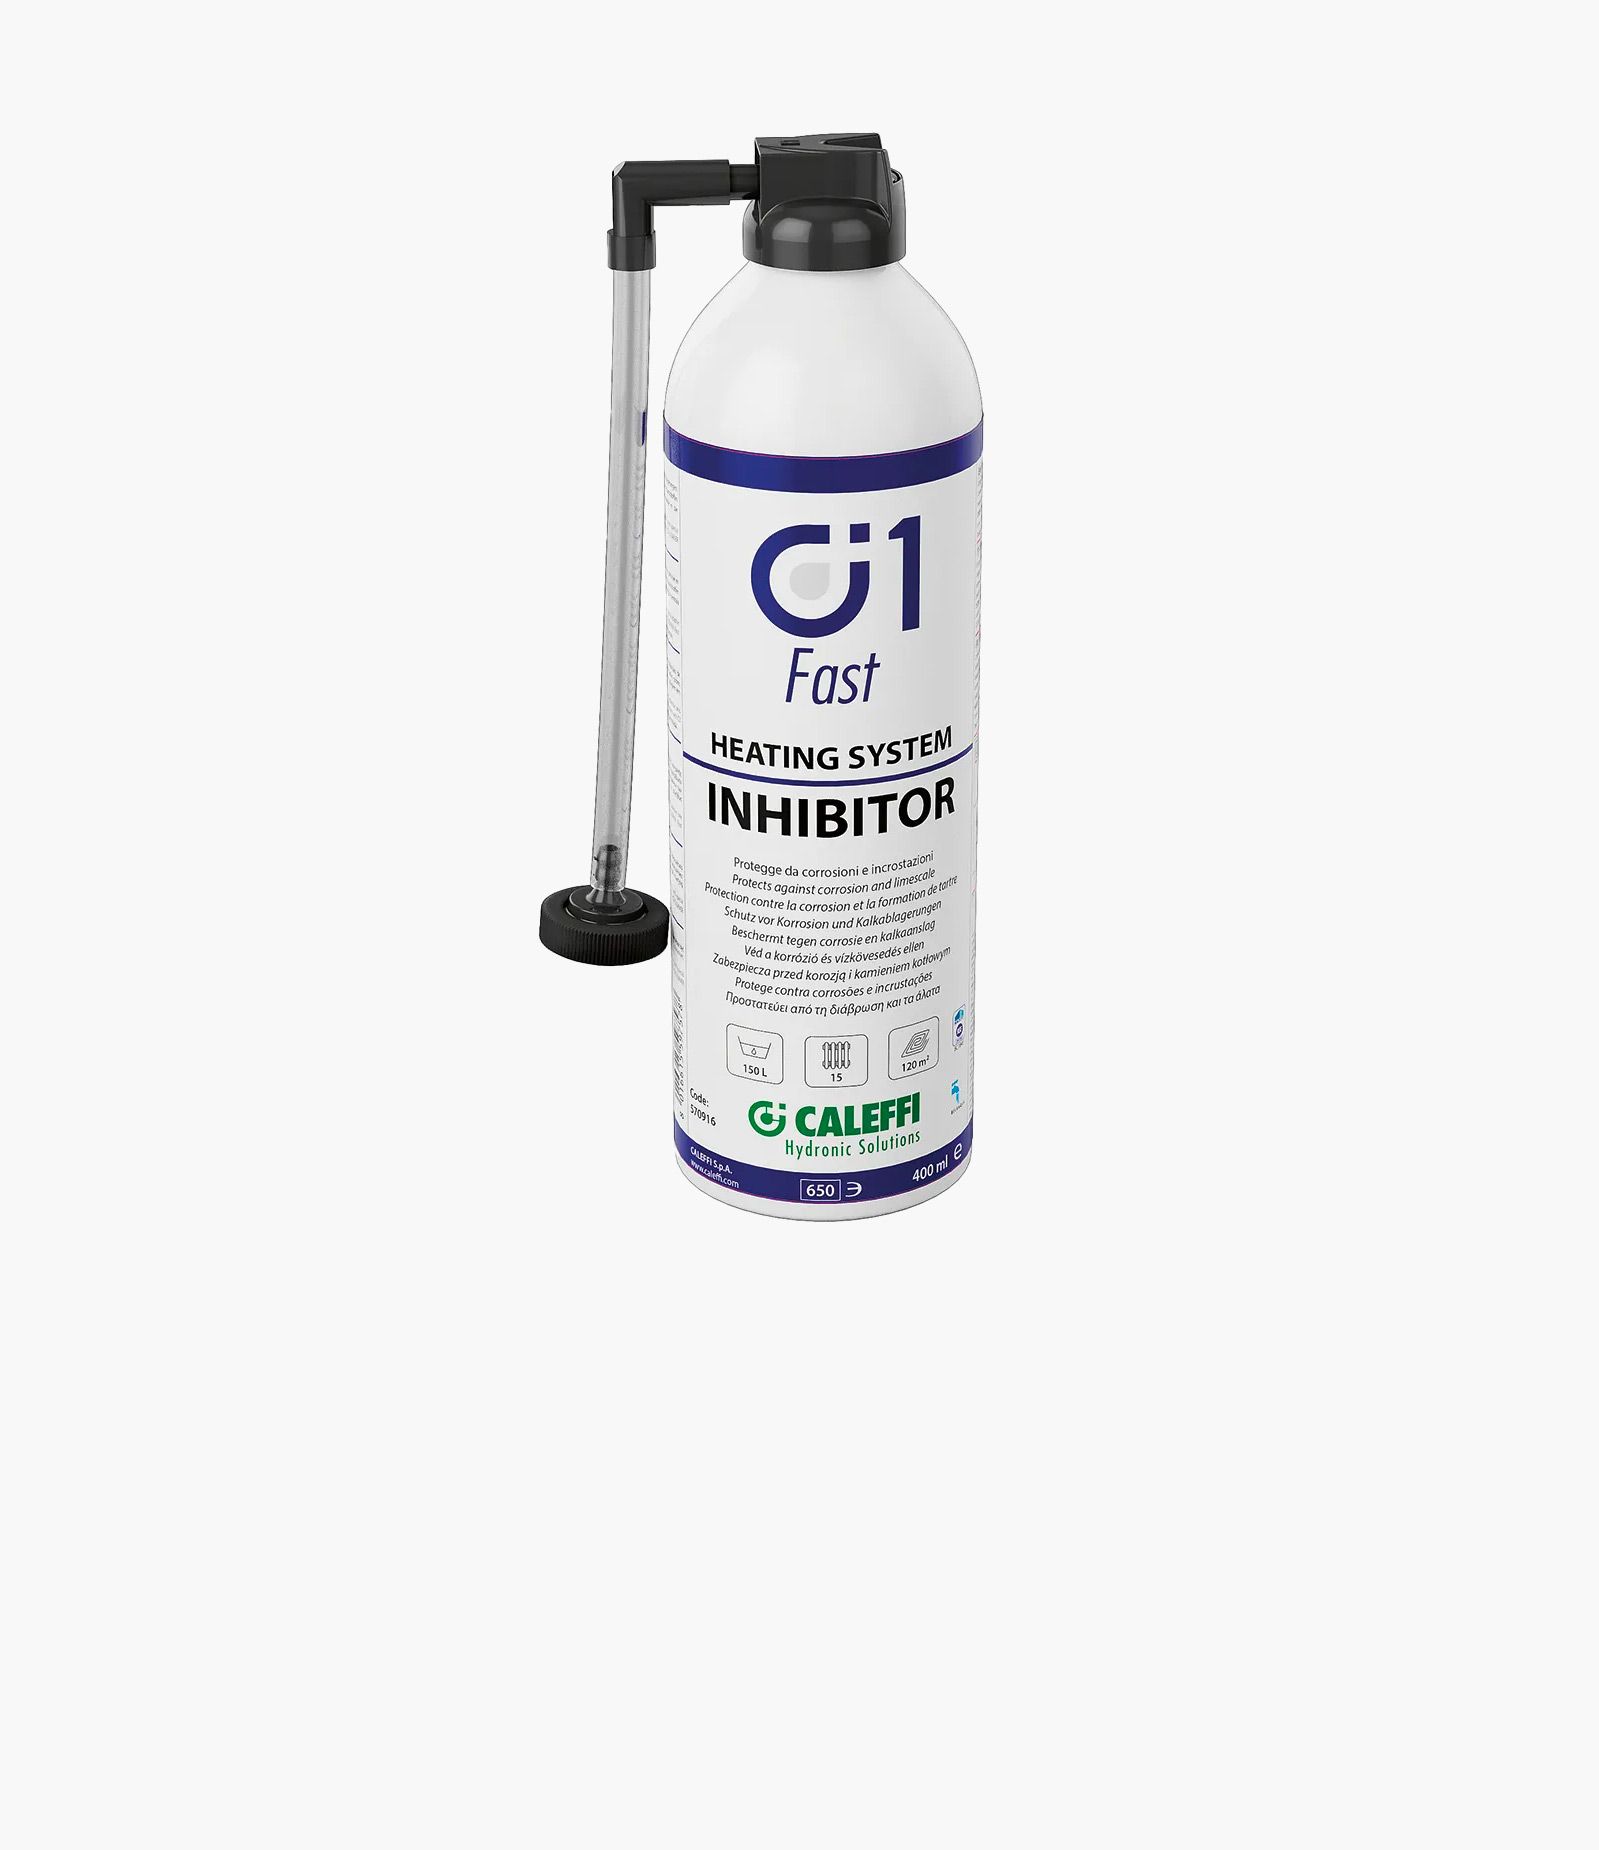 C1 Fast Inhibitor